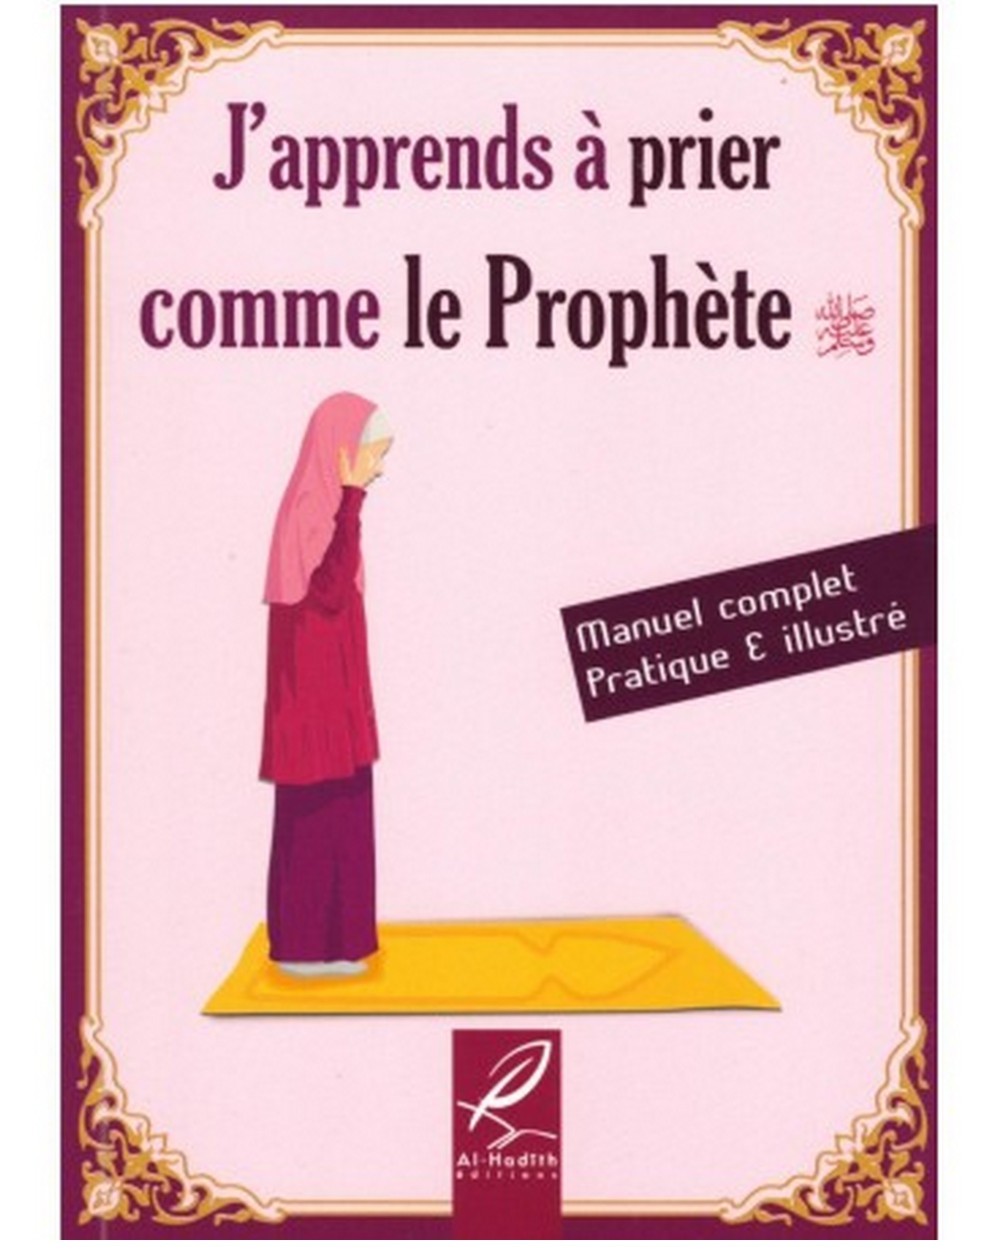 I learn to pray like the prophet - ÉDITIONS AL-HADÎTH